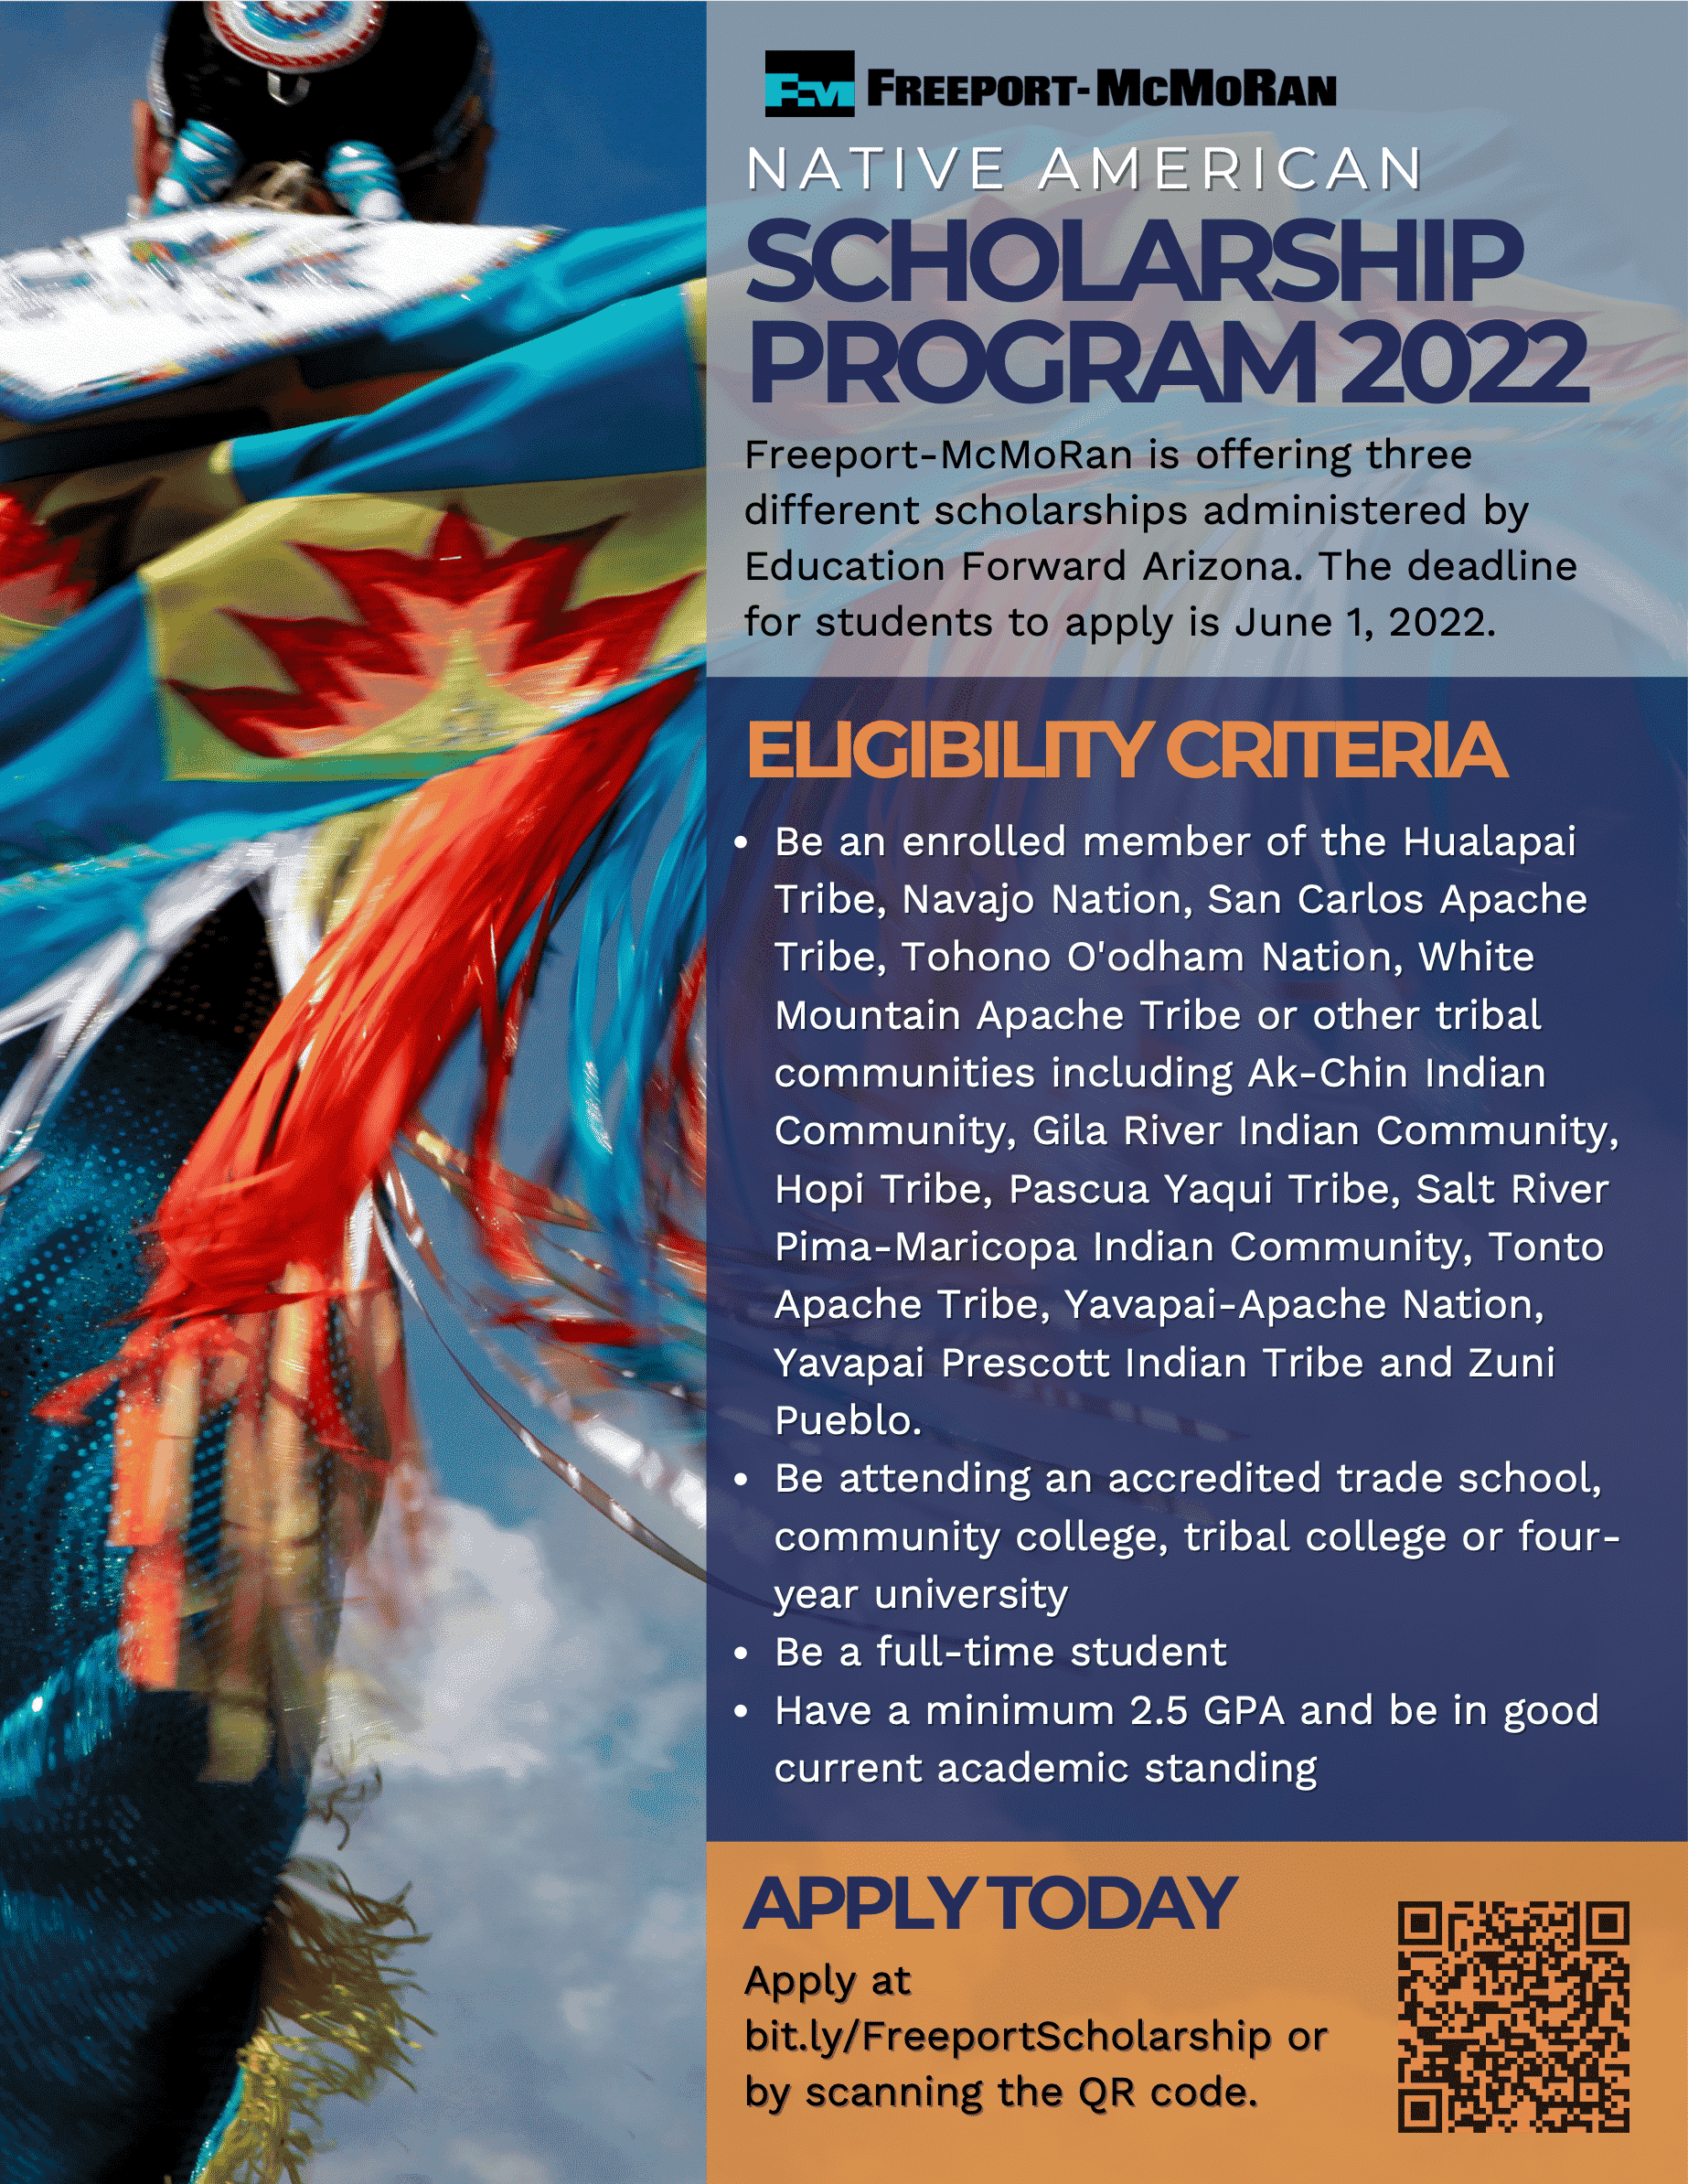 Native American Scholarship Program 2022 — FreeportMcMoRan is offering